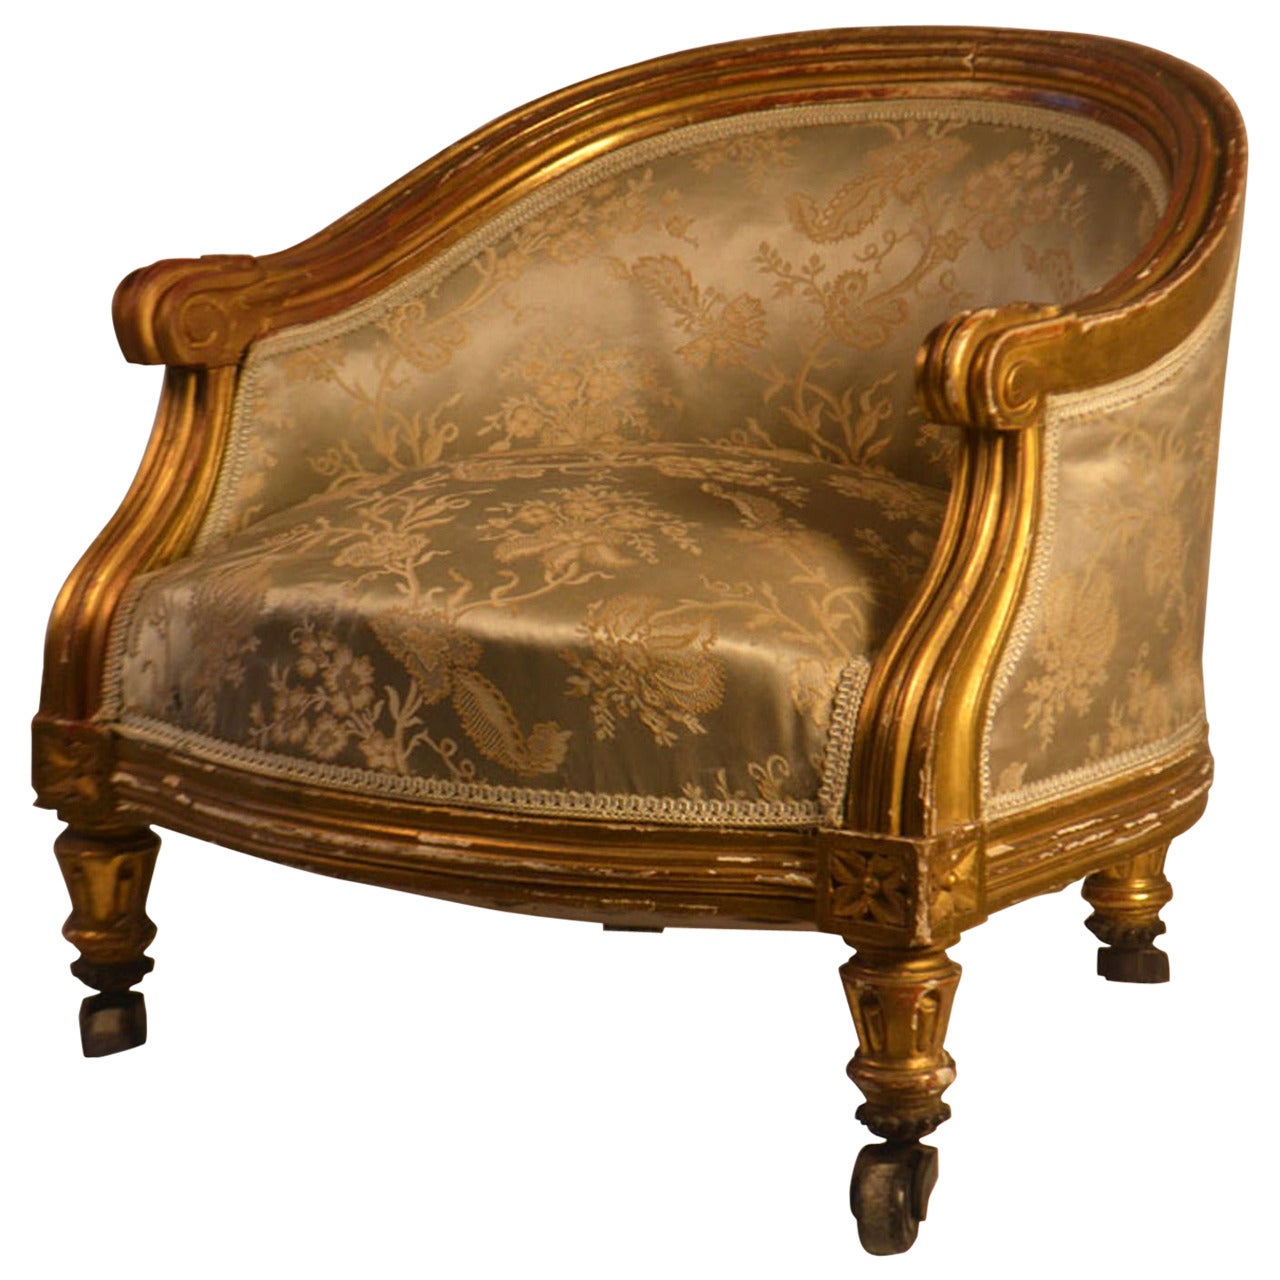 Small Giltwood Louis XVI Children's Chair (Pet chair)